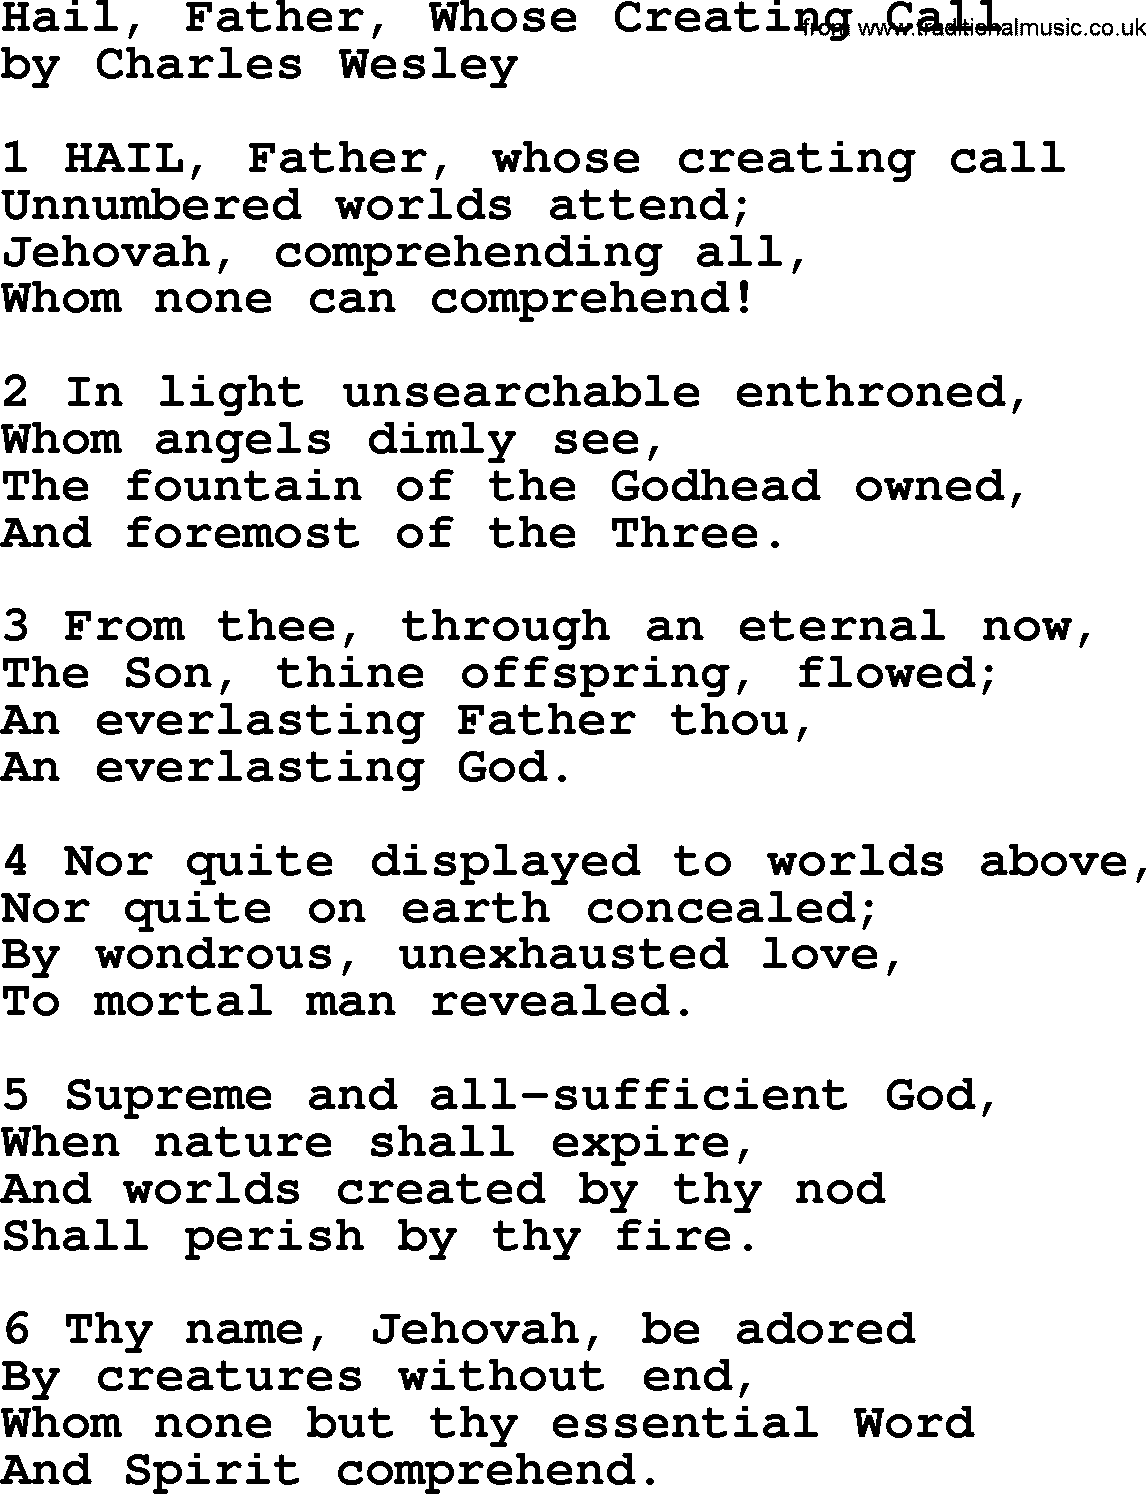 Charles Wesley hymn: Hail, Father, Whose Creating Call, lyrics